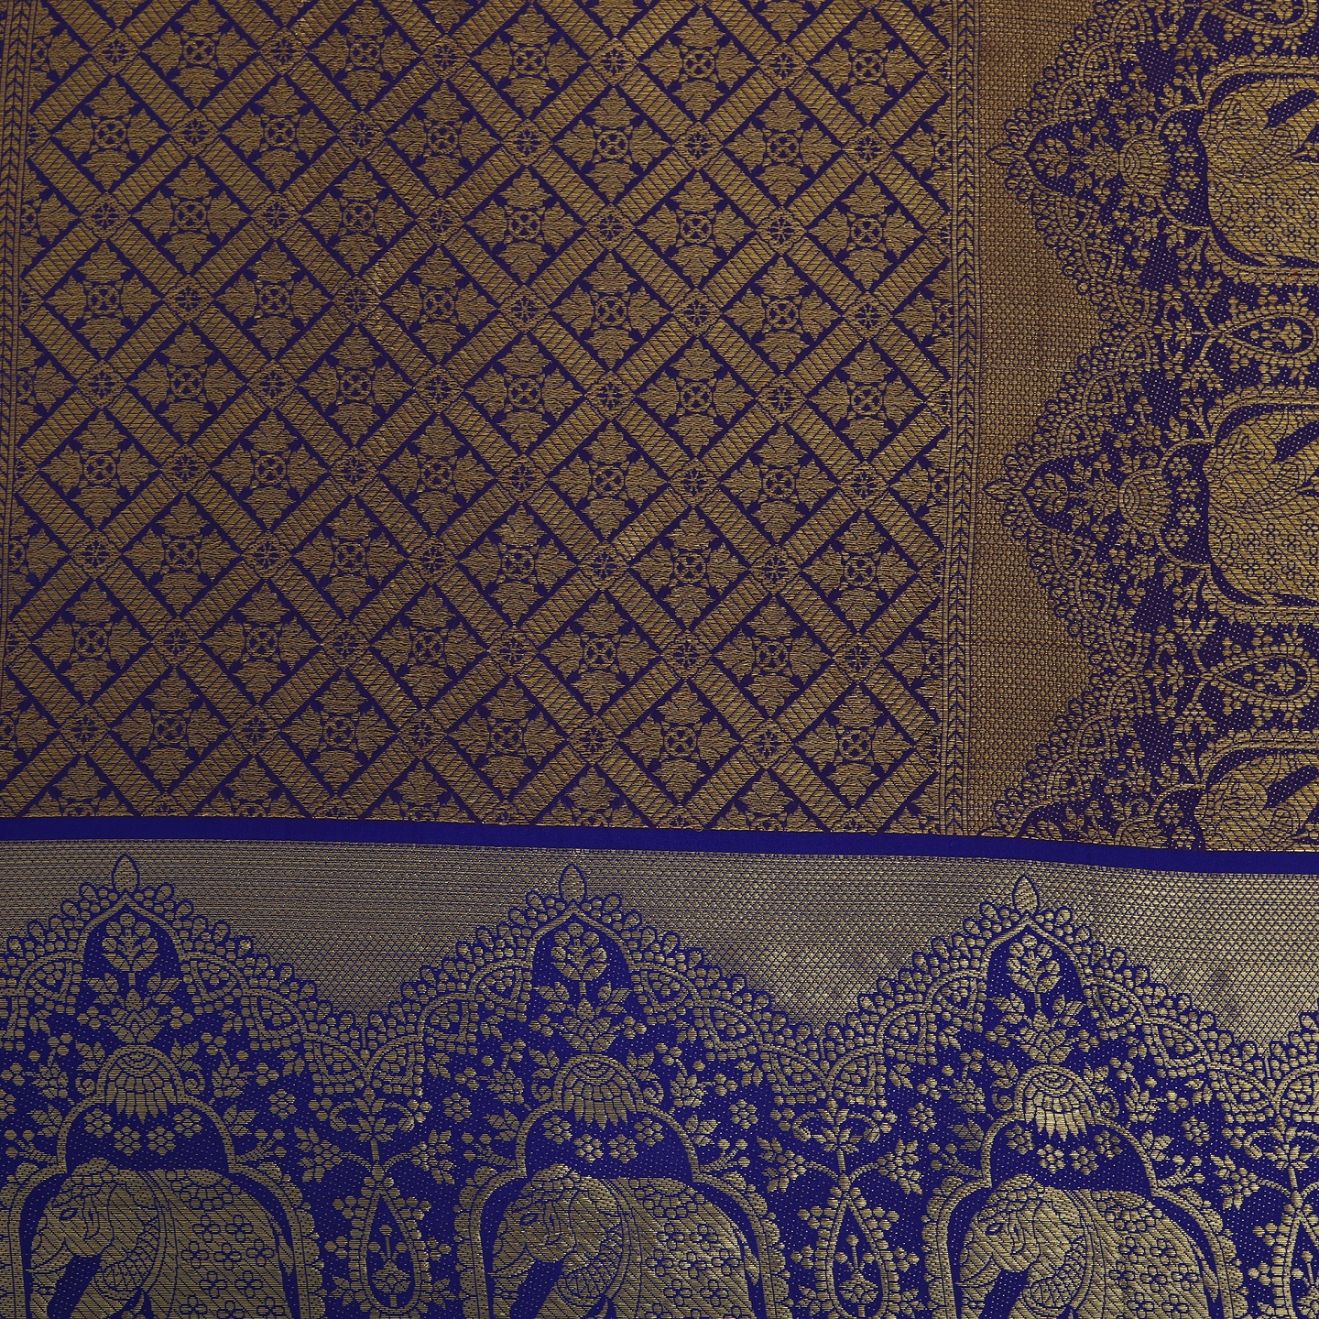 Purple And Gold Zari Toned Wedding Kanchipuram Pattu Silk Saree